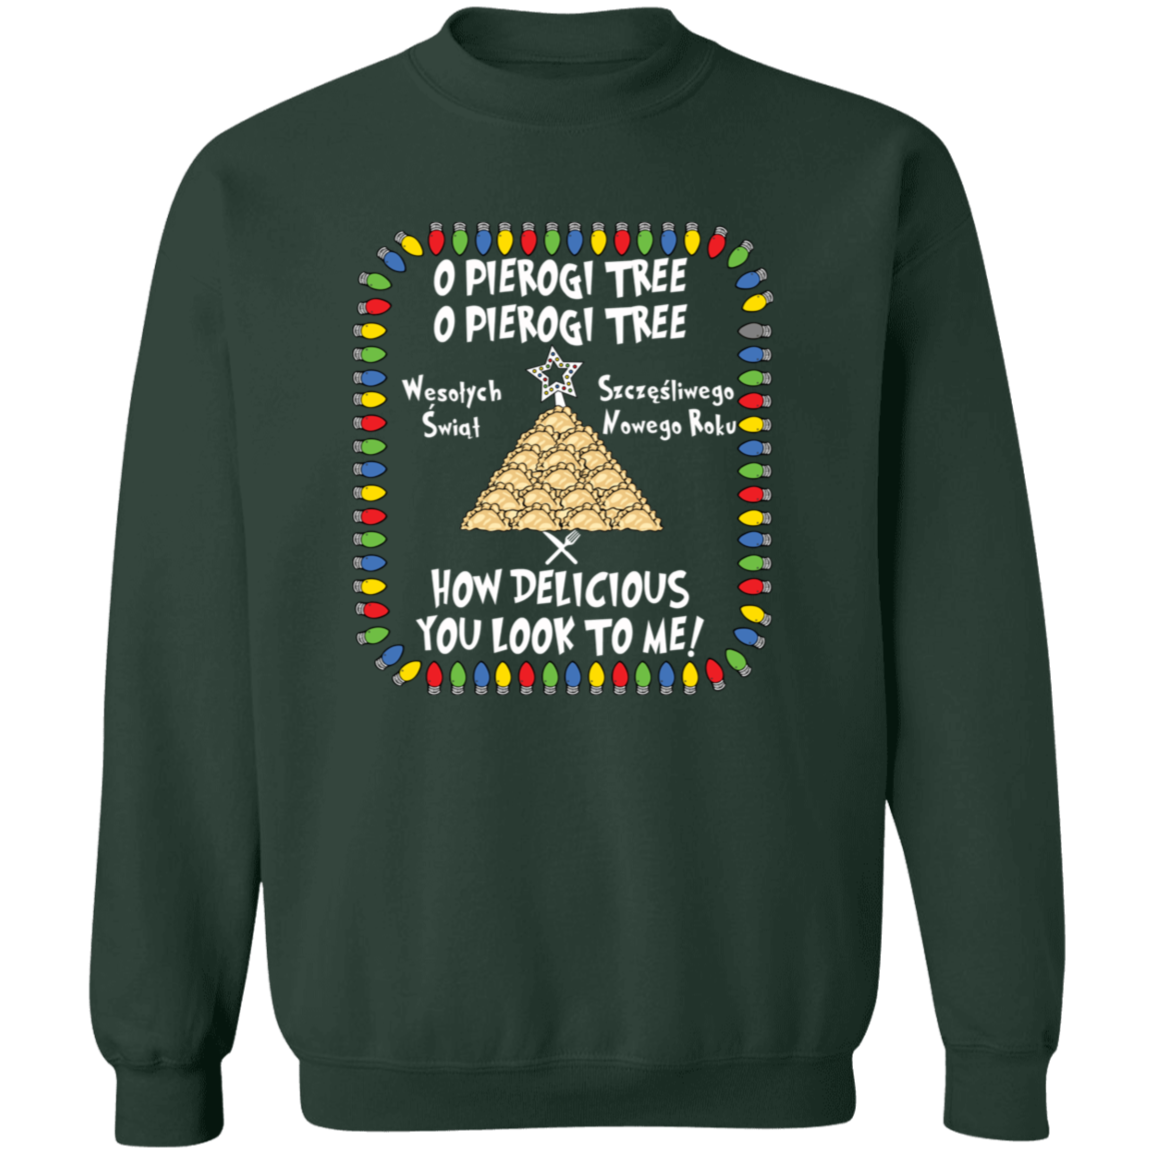 O Pierogi Tree Sweatshirt - How Delicious You Look To Me Sweatshirts CustomCat Forest Green S 